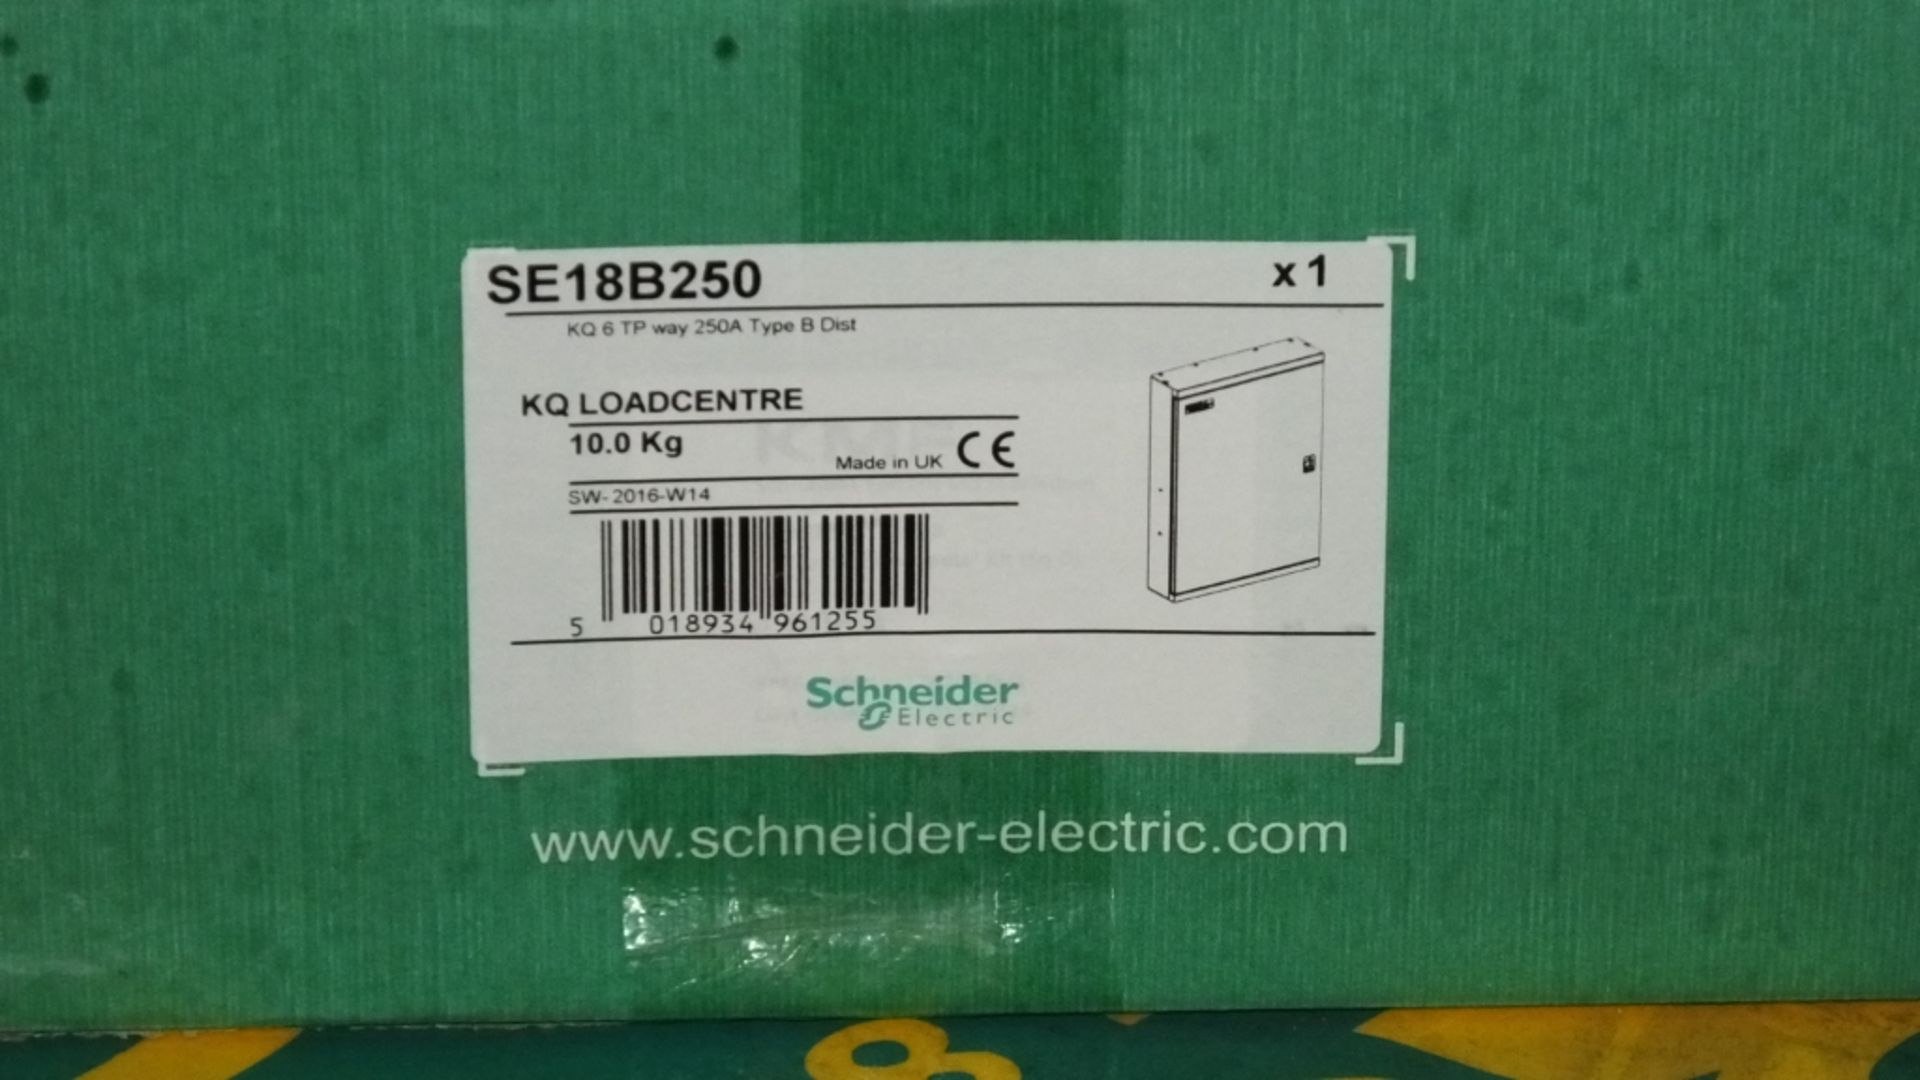 2x Schneider KQ Loadcentre KQ 6TP way 250A Type B Dist - Image 2 of 3